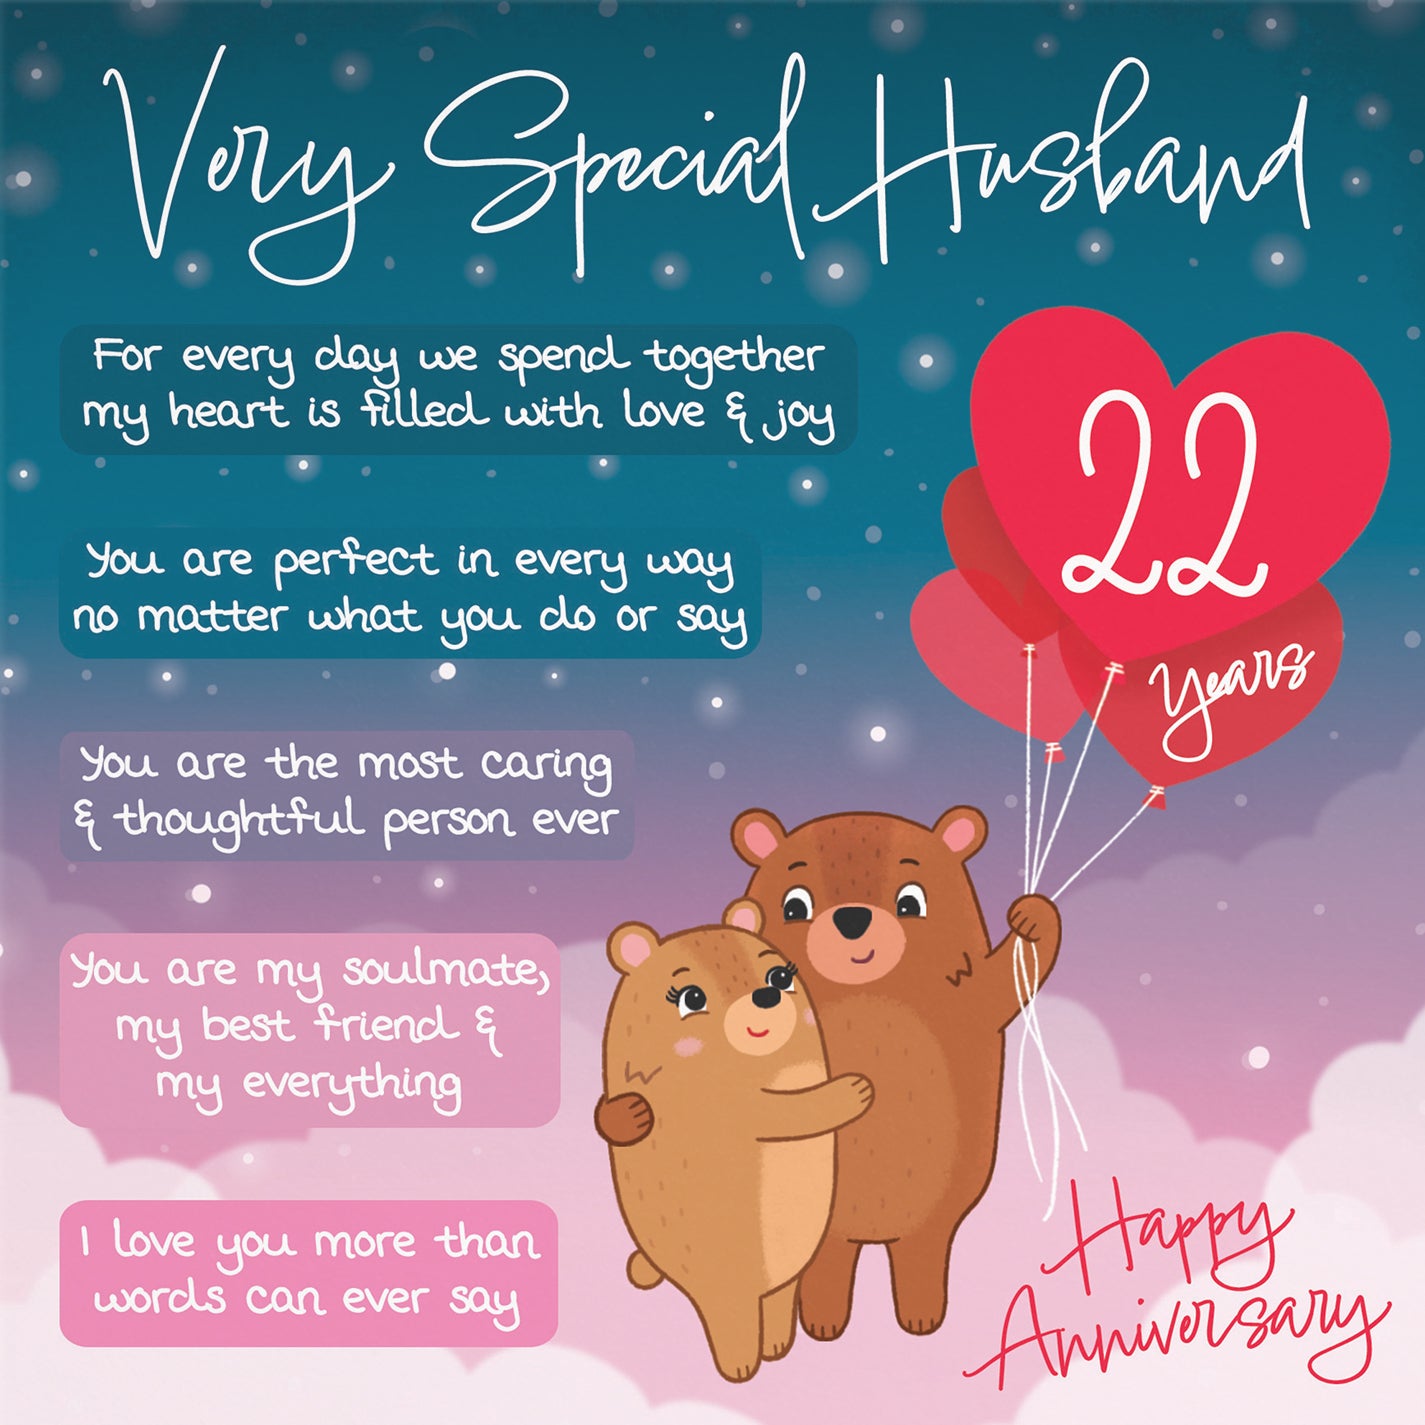 Husband 22nd Anniversary Card Starry Night Cute Bears